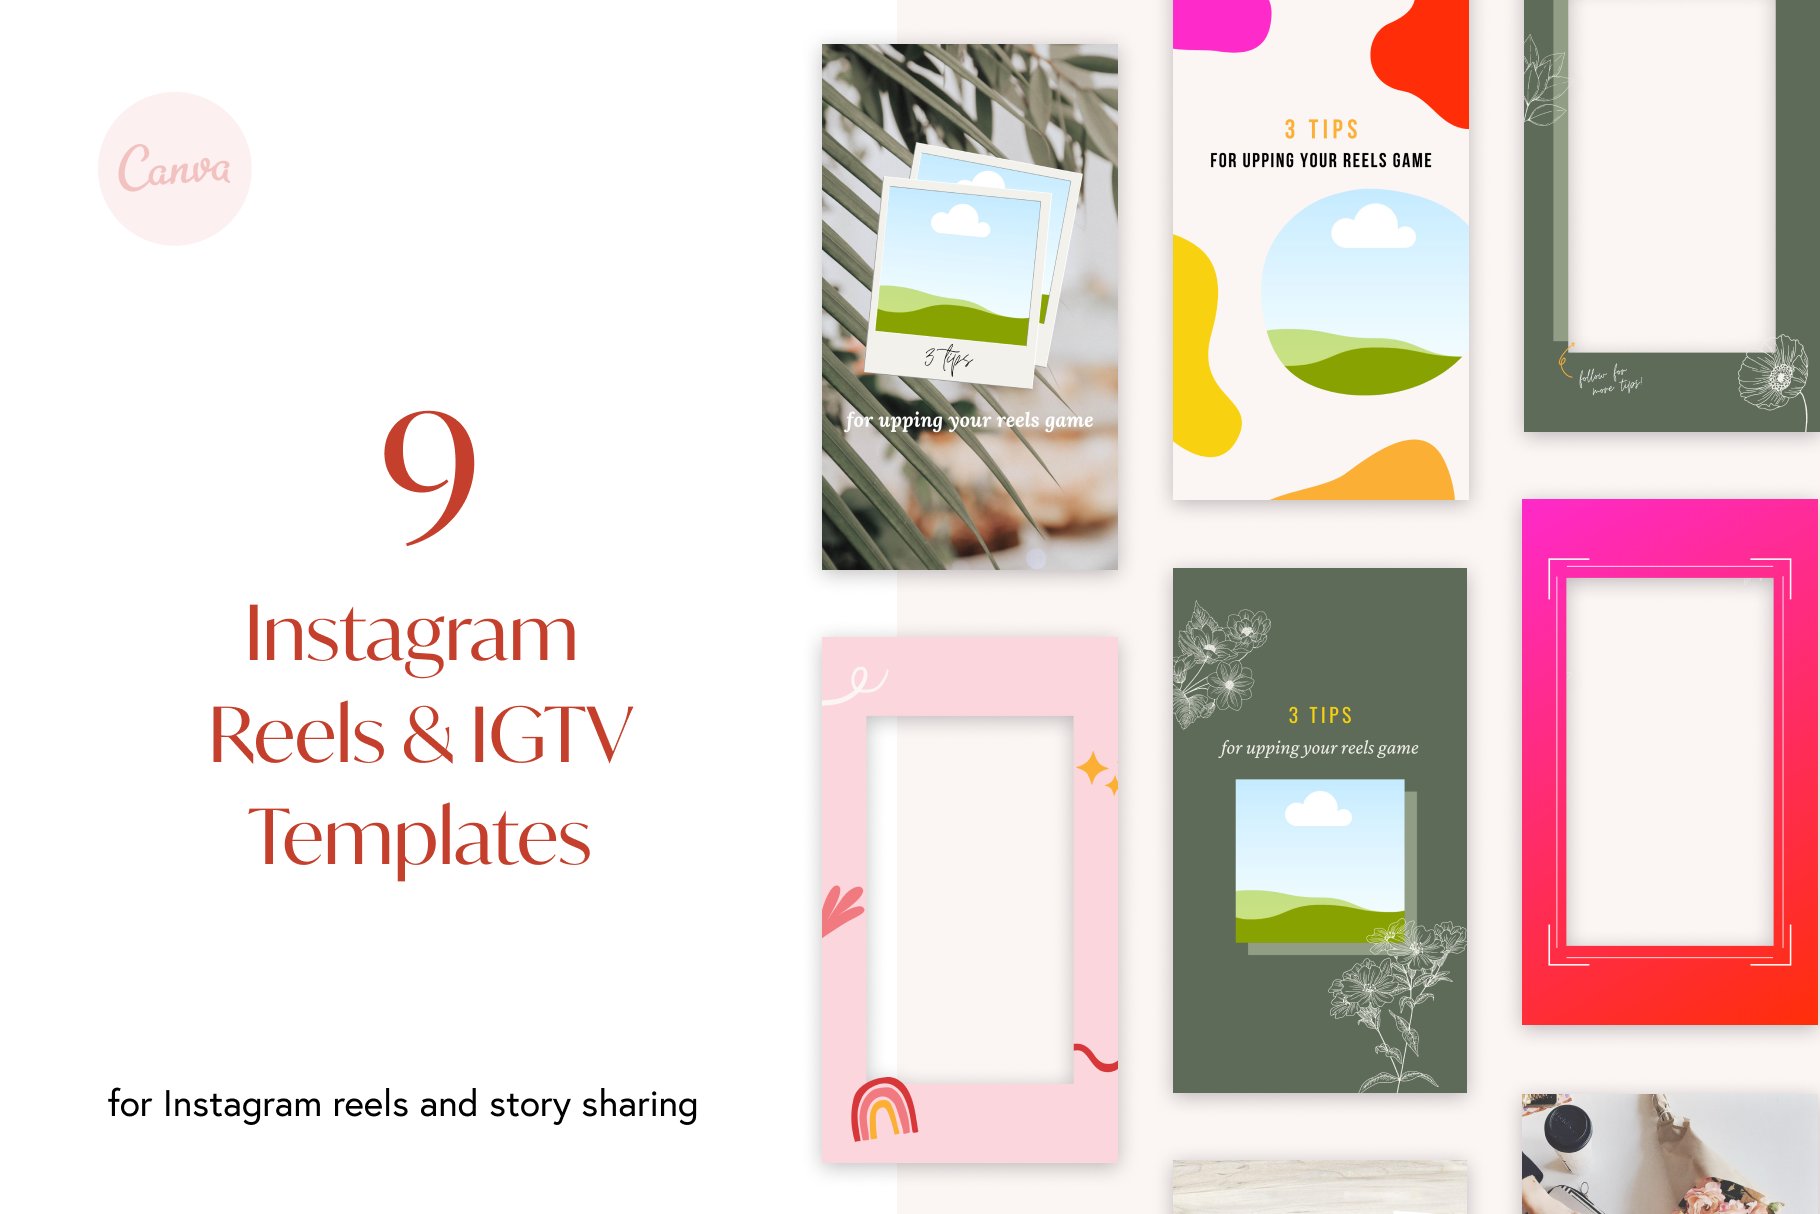 Instagram Reels & IGTV Templates cover image.